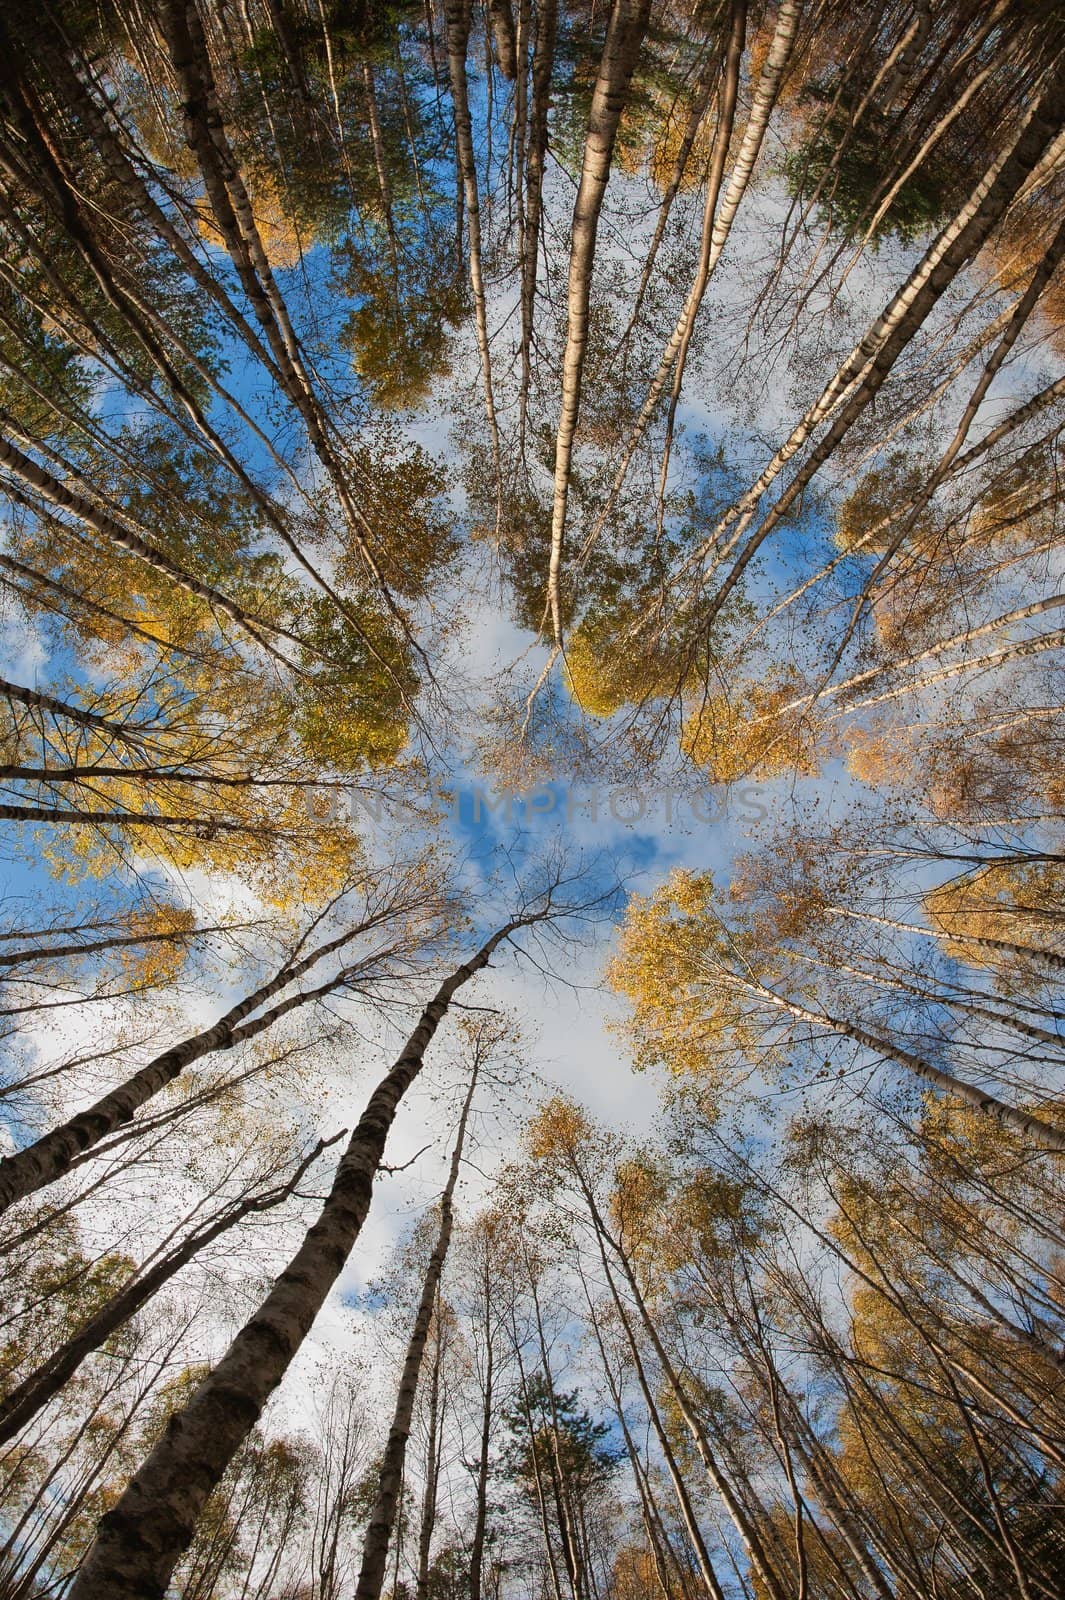 Sky in birch forest. by SURZ